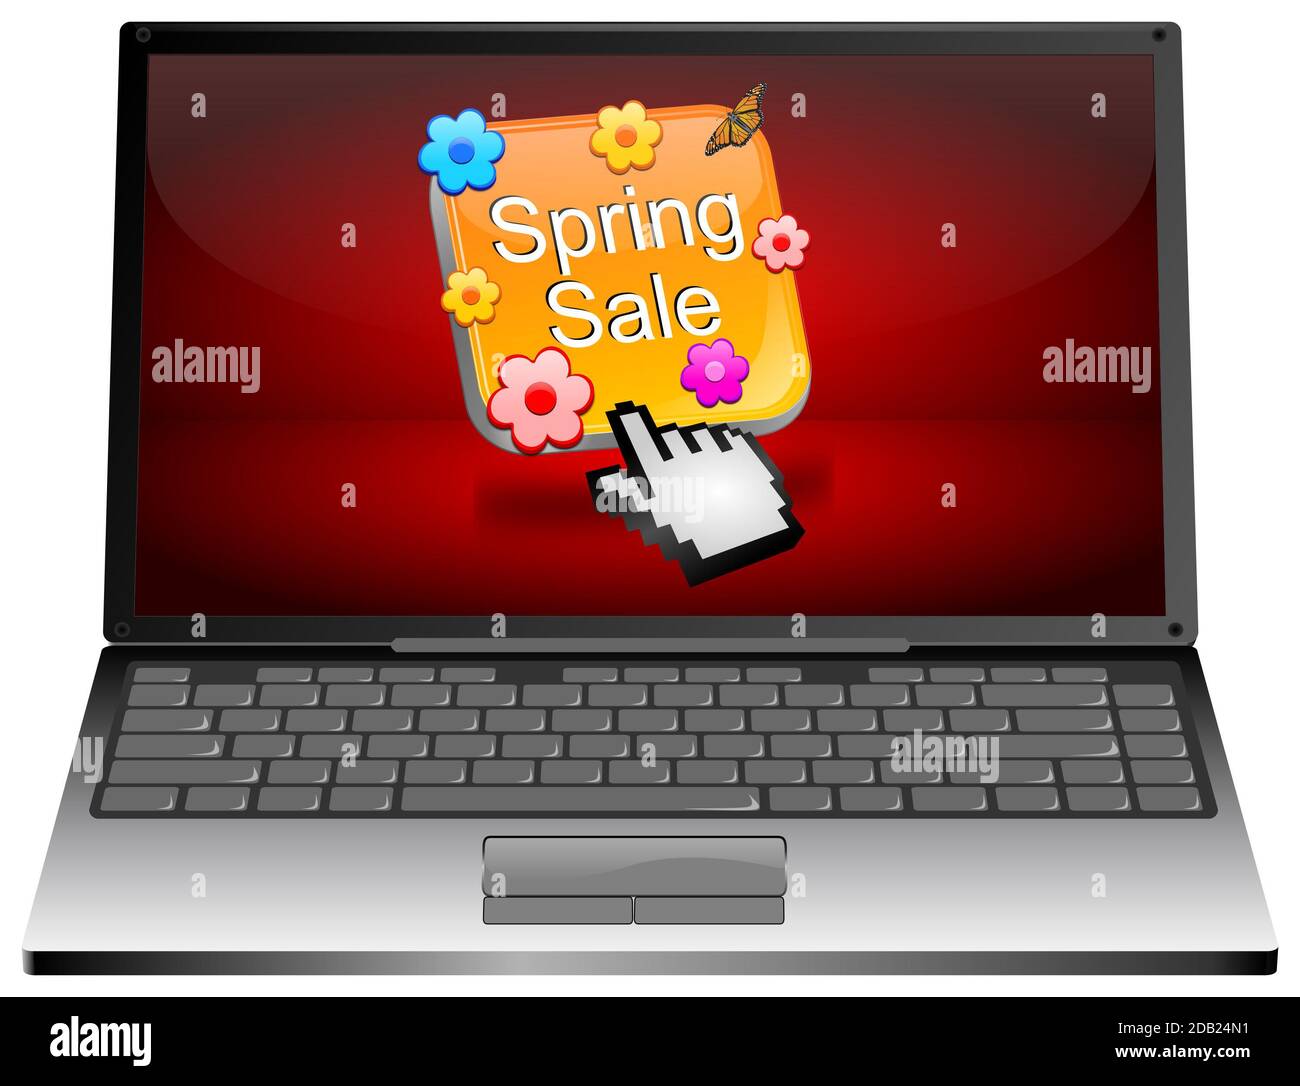 Laptop-Computer mit orangefarbener Spring Sale-Taste auf rotem Desktop - 3D-Illustration Stockfoto